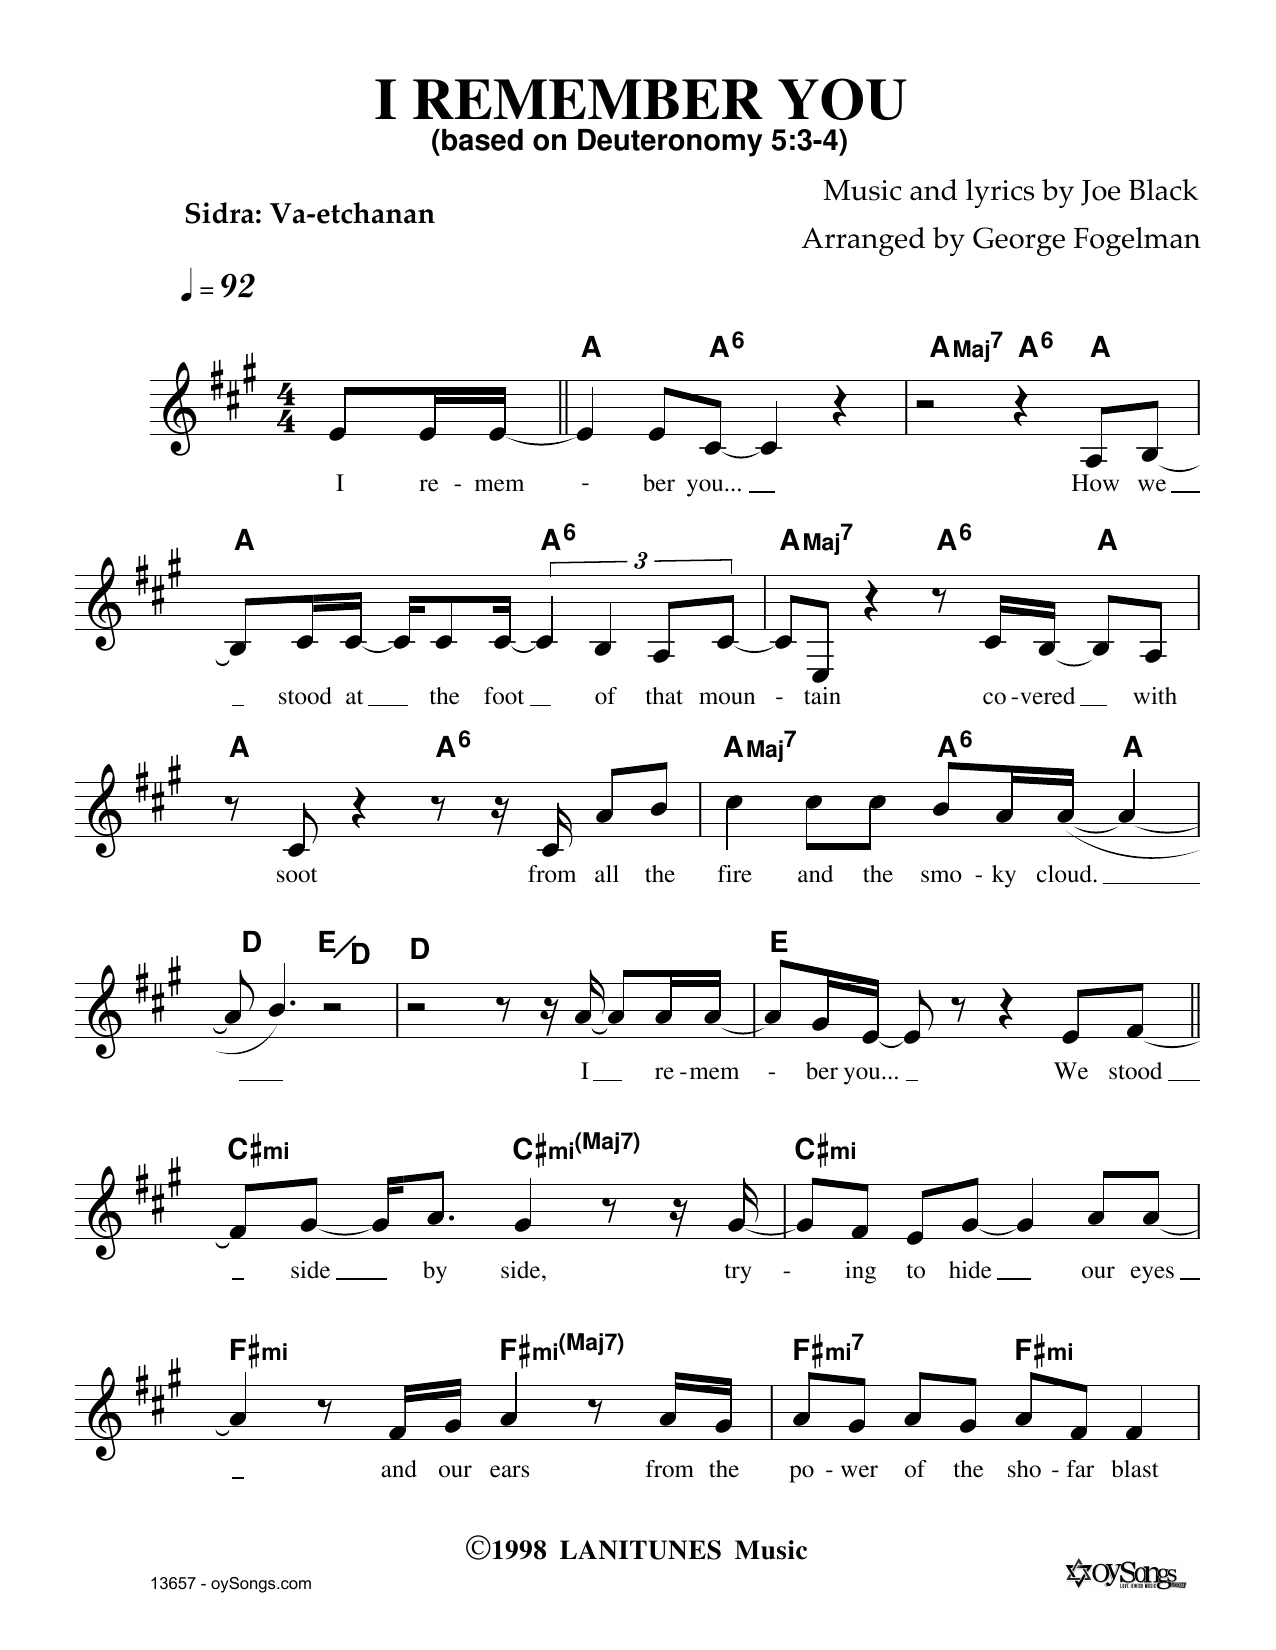 Joe Black I Remember You Sheet Music Notes & Chords for Melody Line, Lyrics & Chords - Download or Print PDF